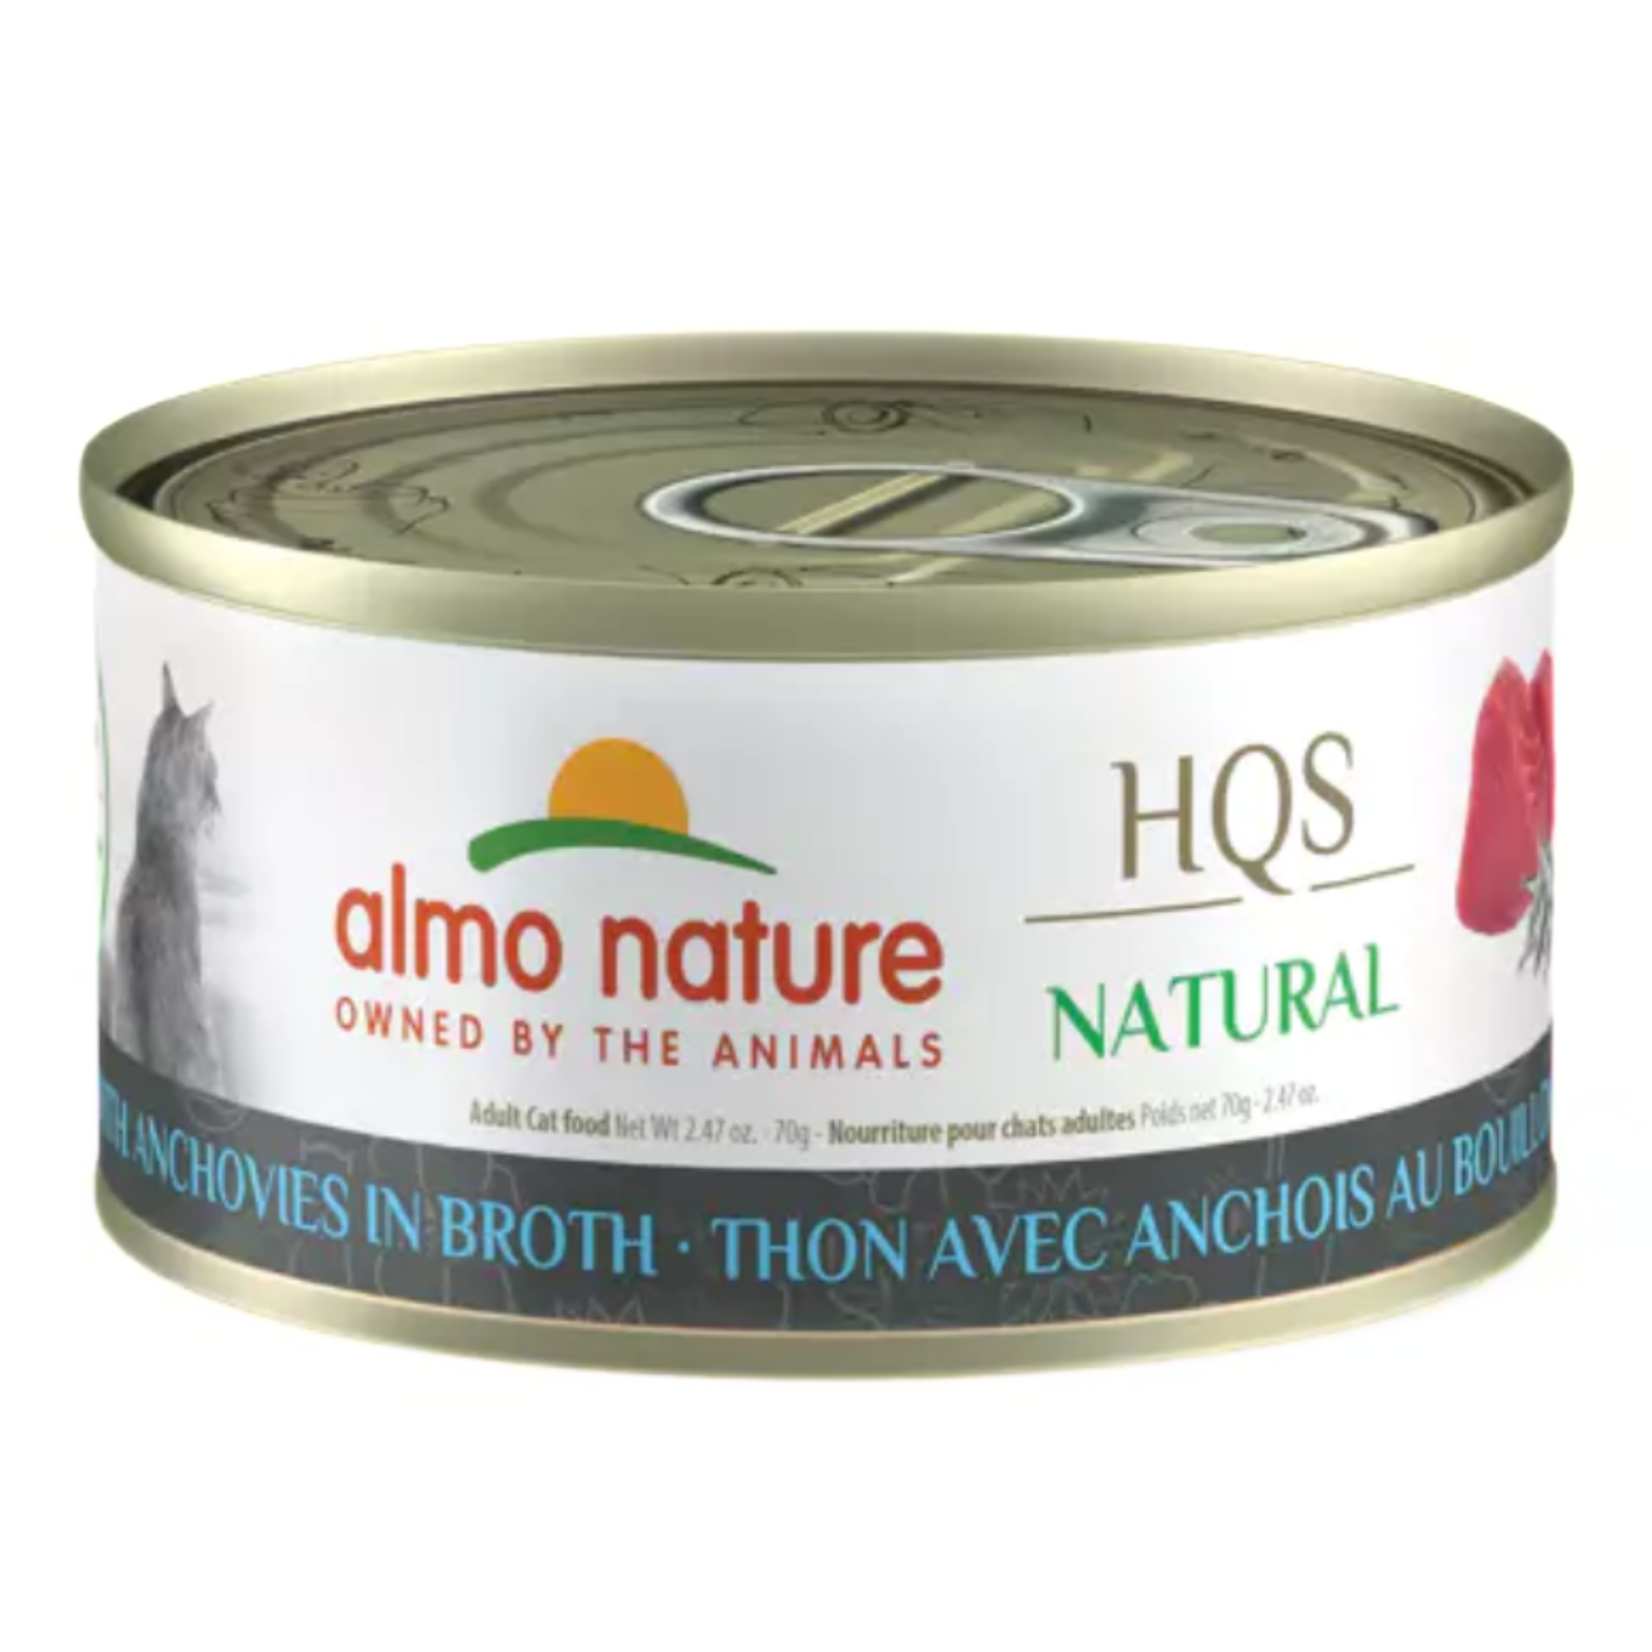 Almo Nature Almo Nature: HQS Natural: Tuna & Anchovies in Broth 70g